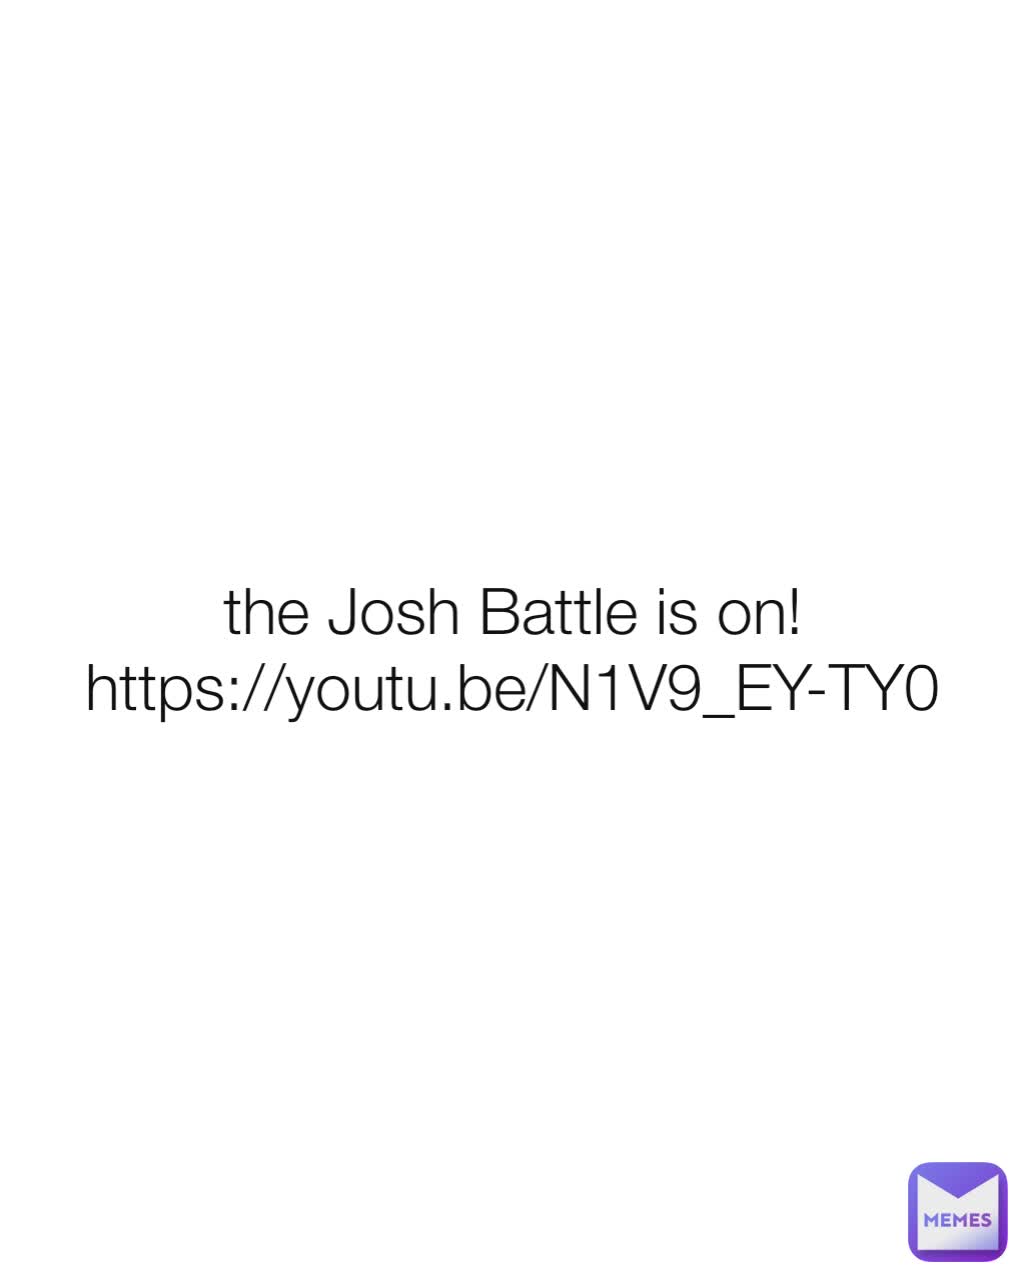 the Josh Battle is on!
https://youtu.be/N1V9_EY-TY0